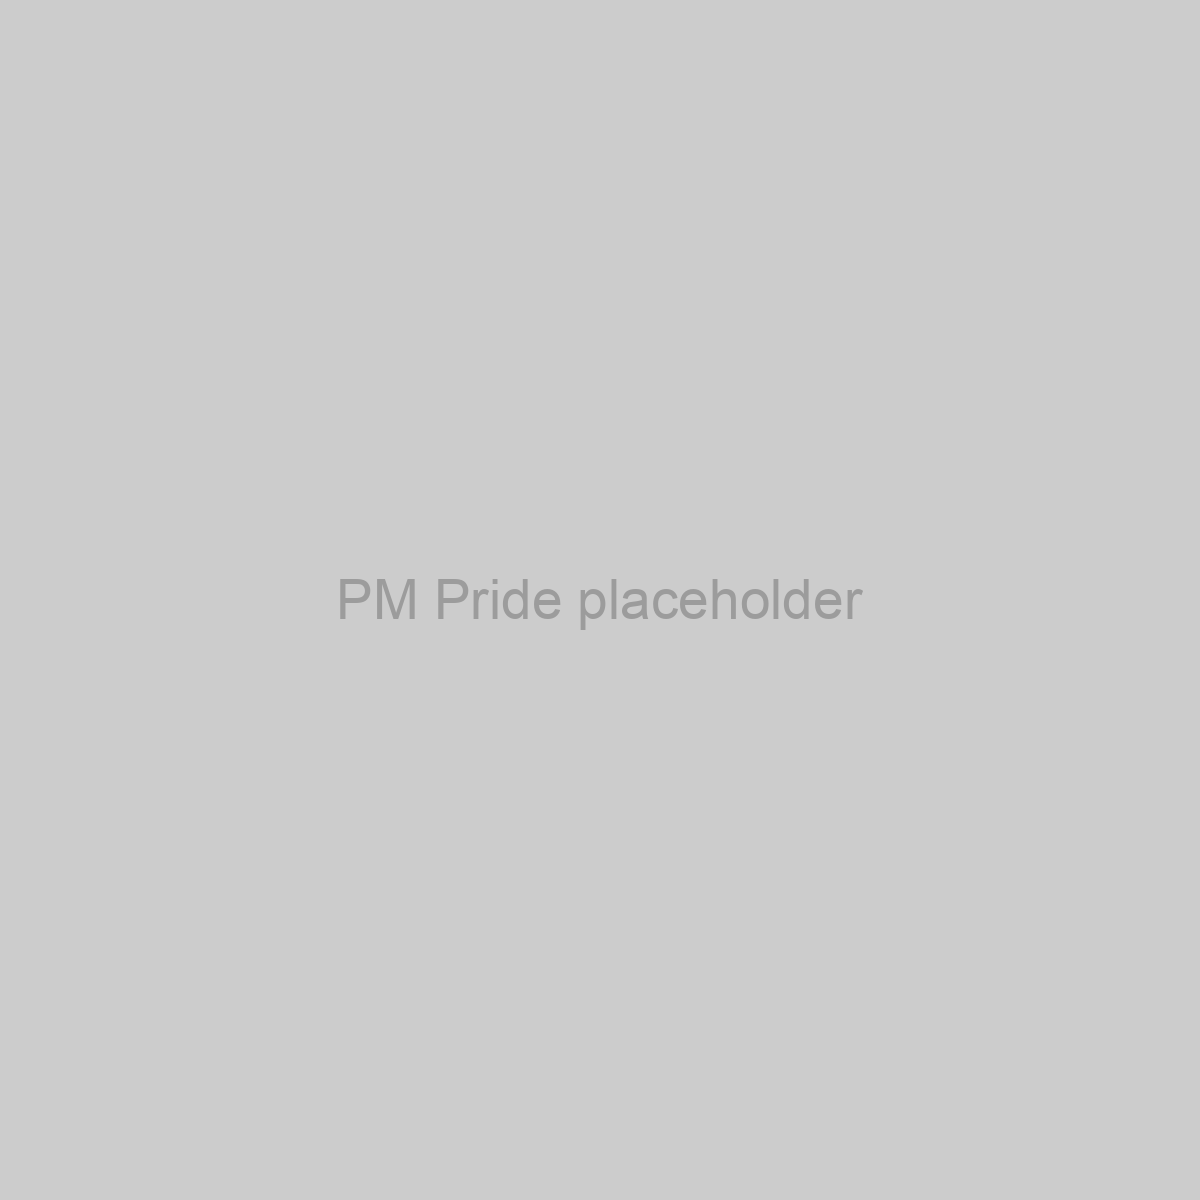 PM Pride Placeholder Image